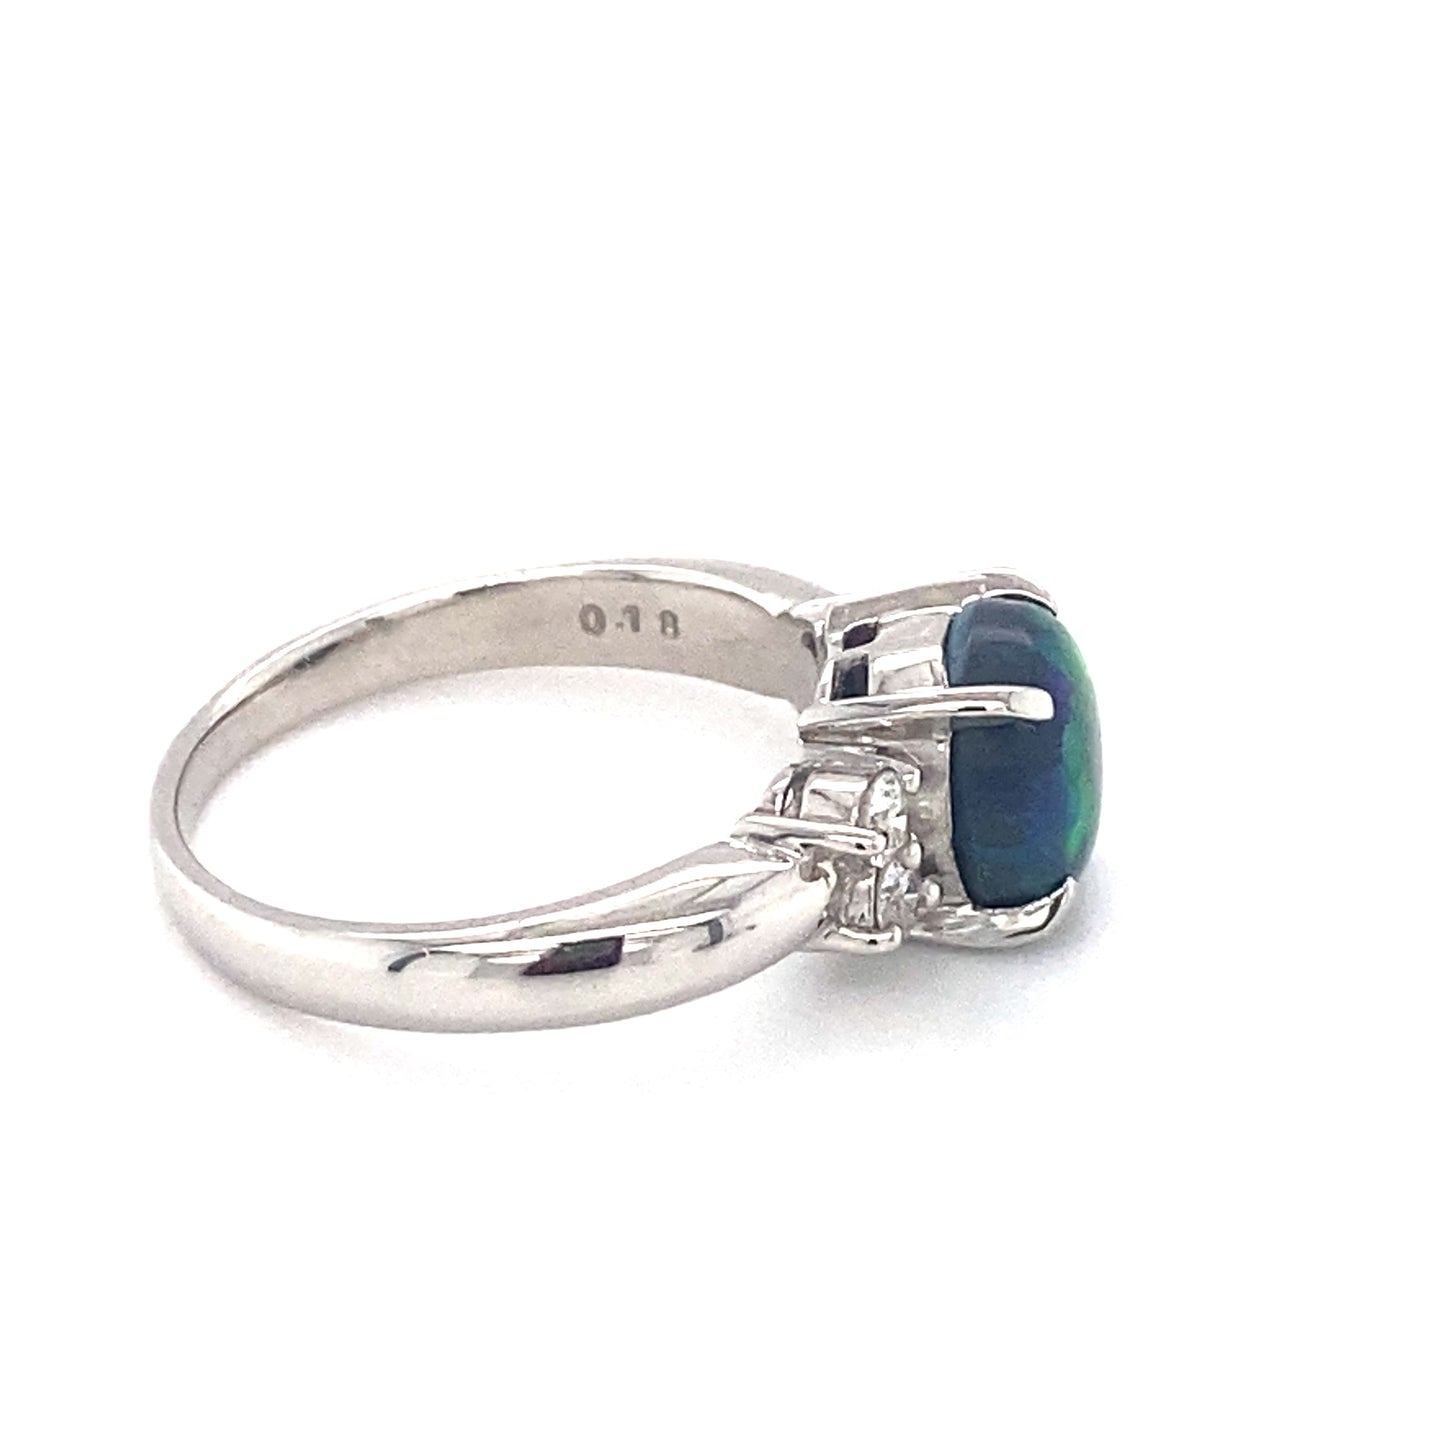 Circa 1990s 1.36ct Australian Opal and Diamond Ring in Platinum